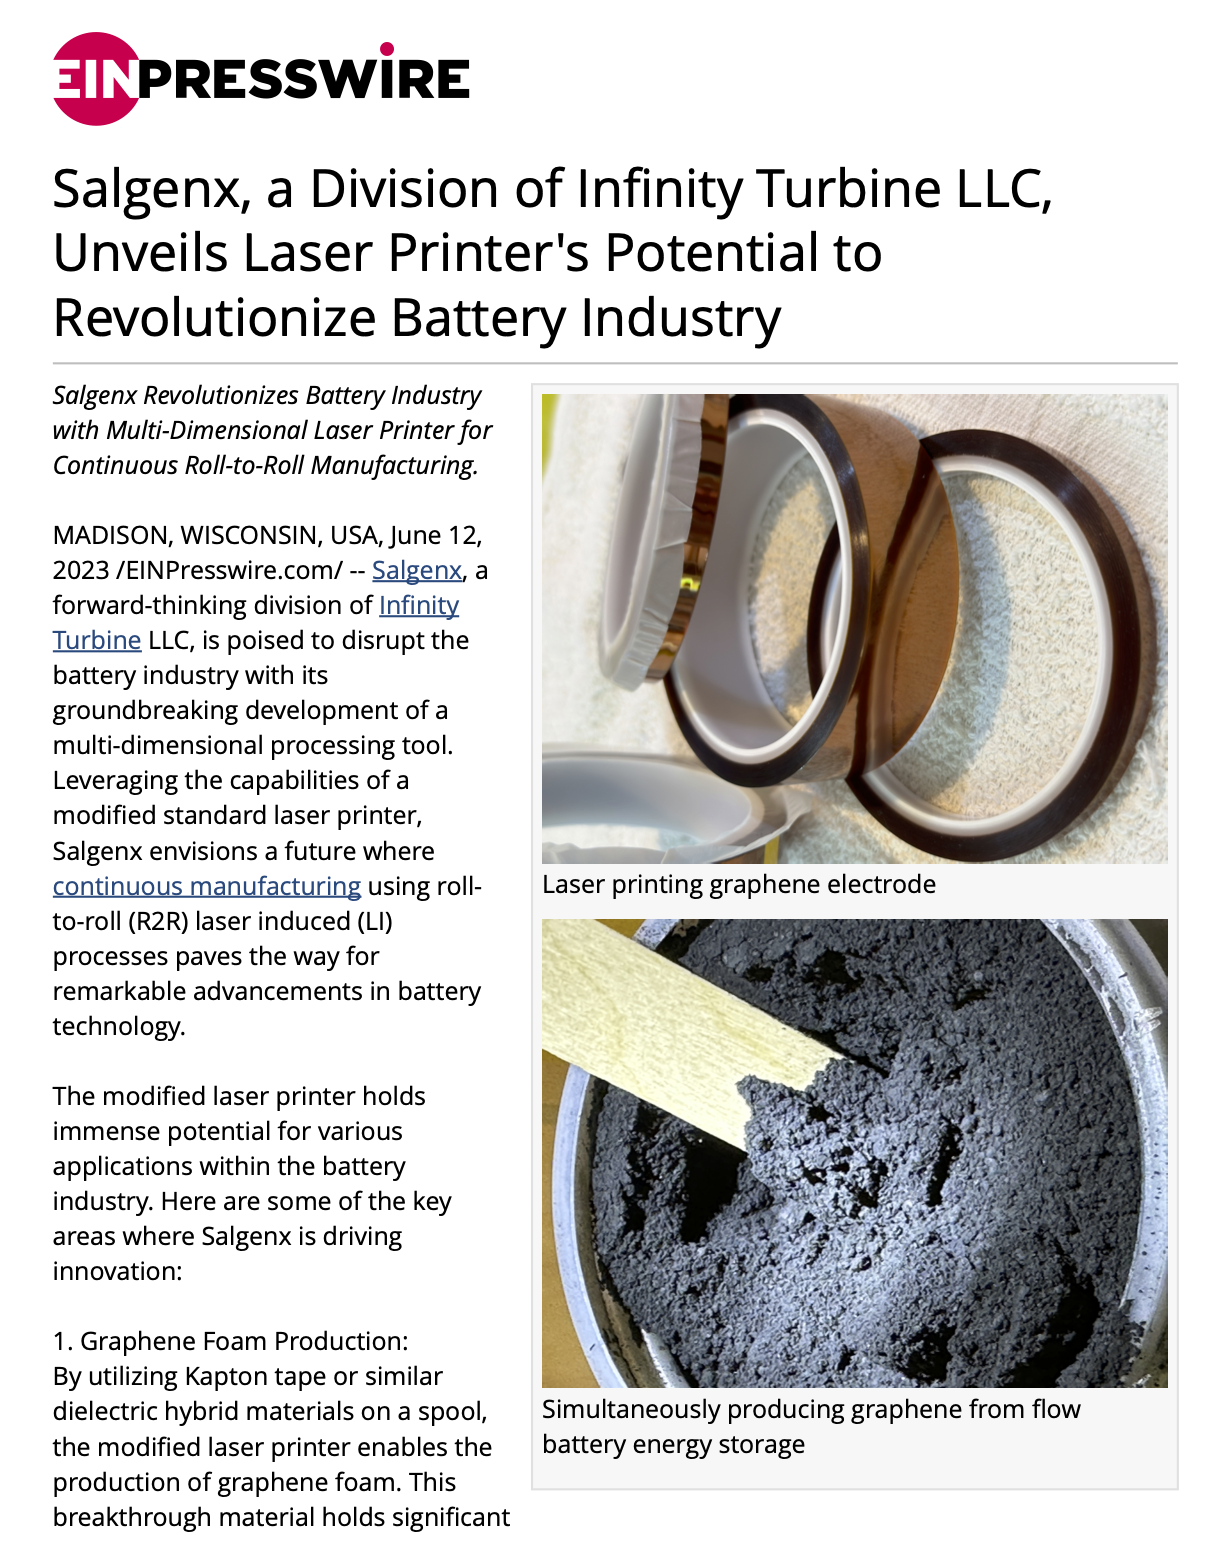 Salgenx Unveils Laser Printer's Potential to Revolutionize Battery Industry